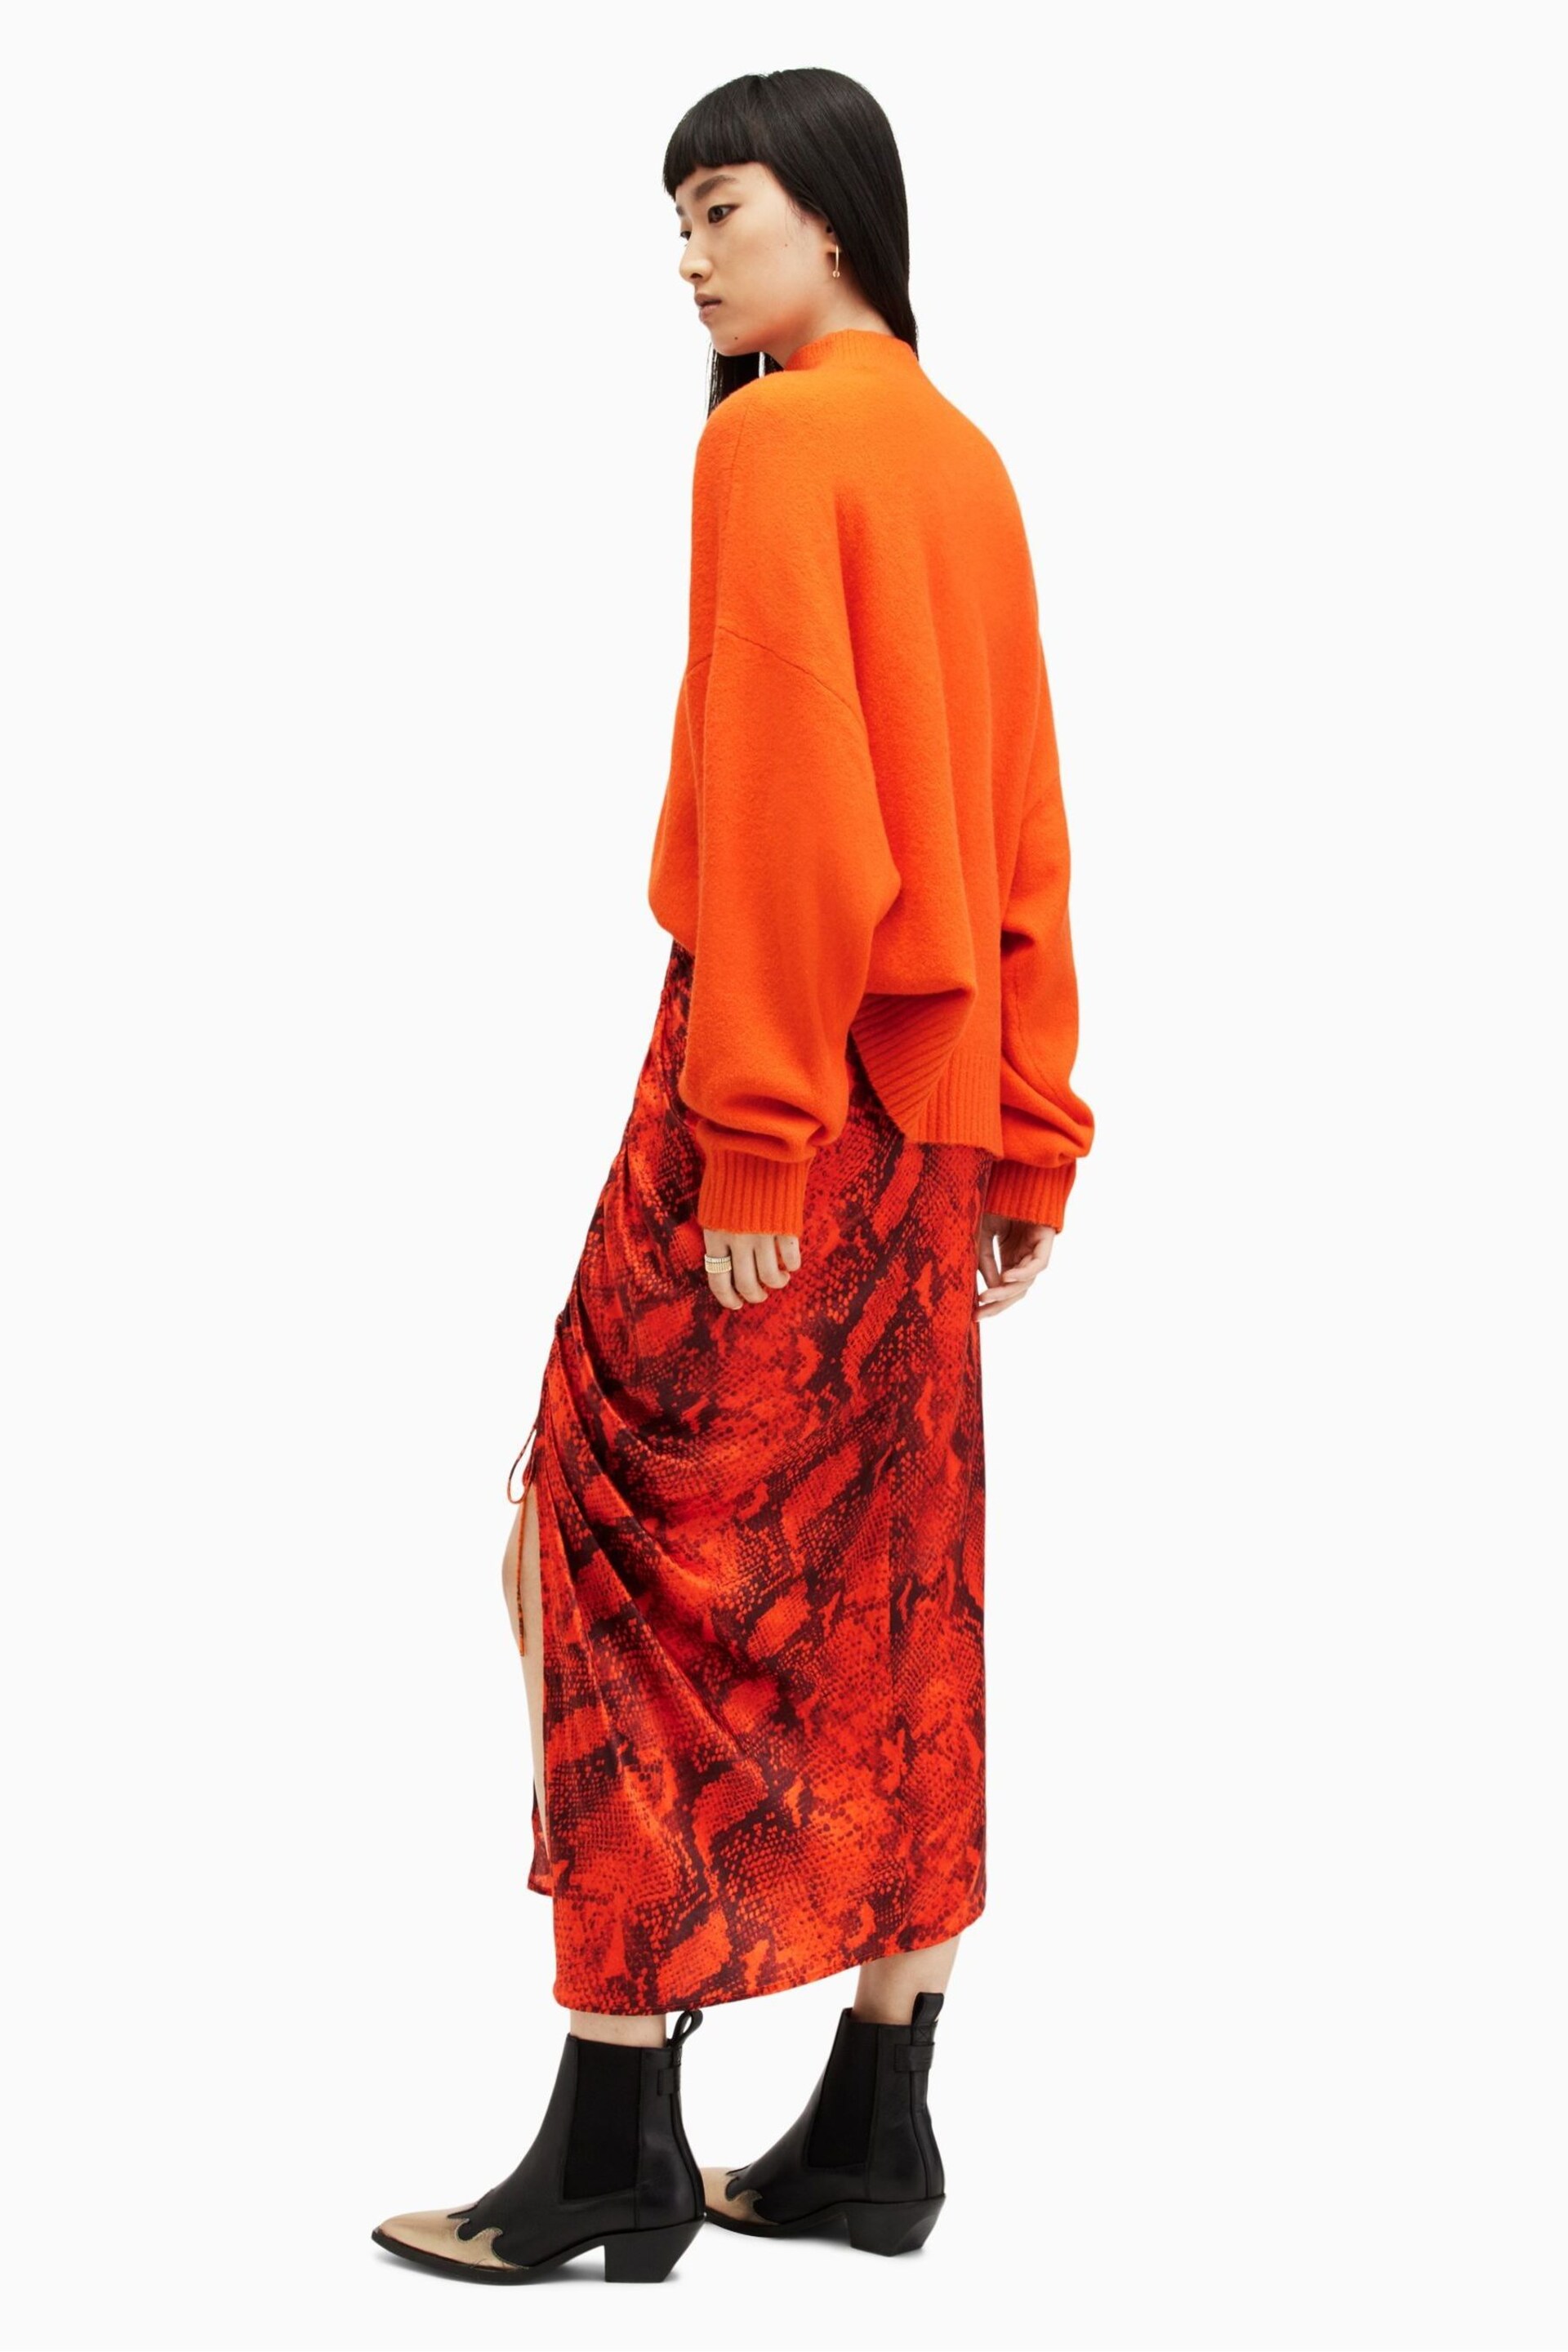 AllSaints Orange Carla Tahoe Skirt - Image 2 of 6